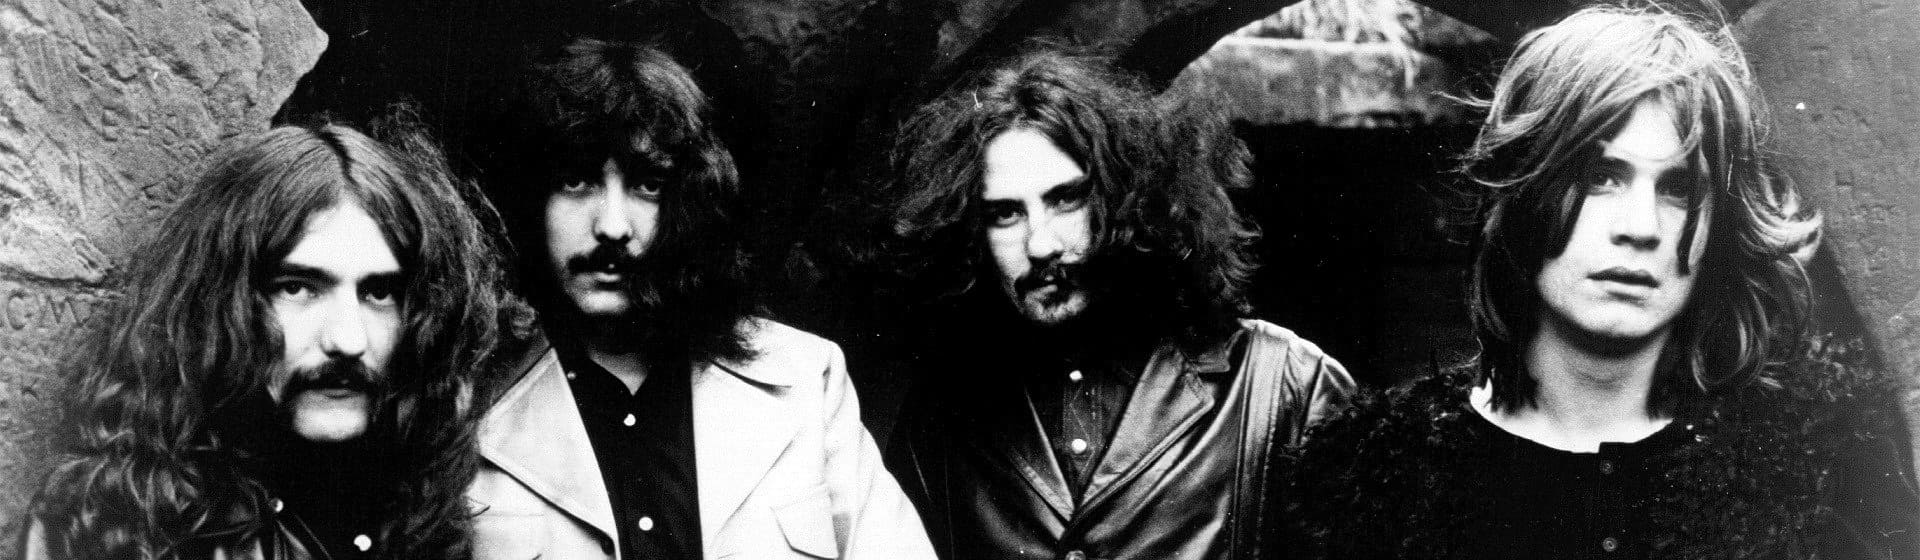 Black Sabbath - Костюмы